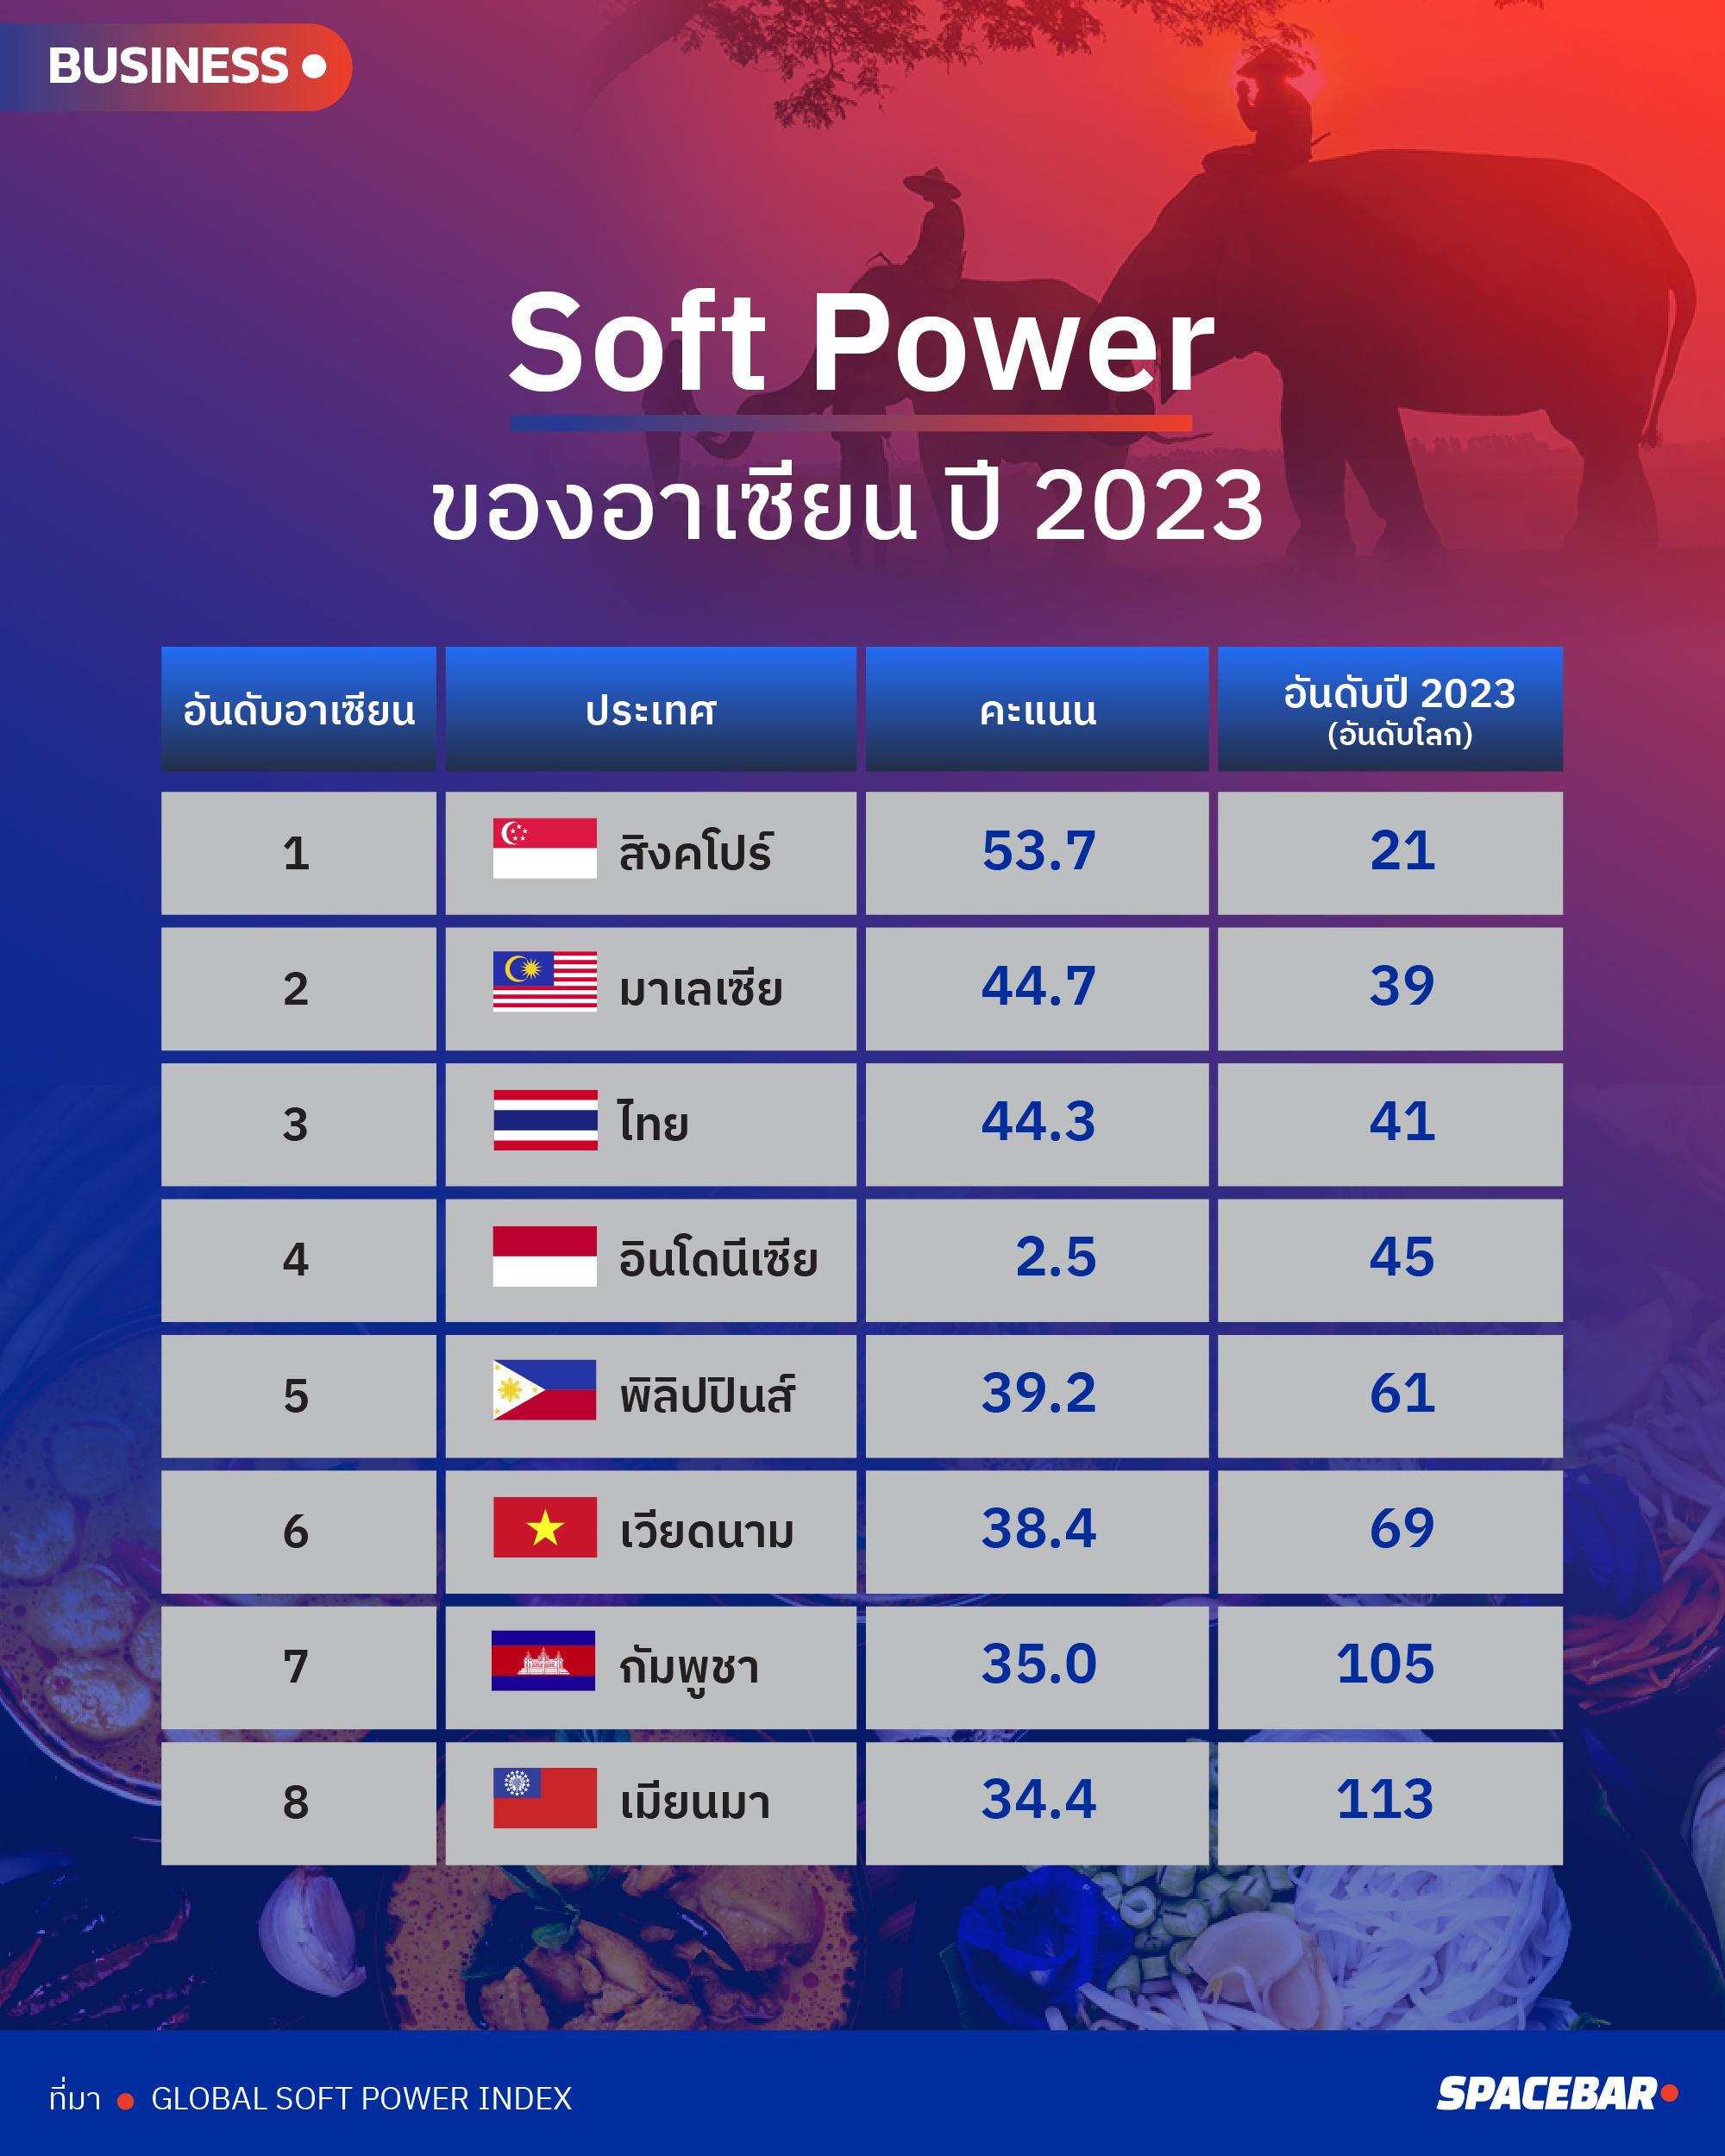 Global Soft Power Index, ดัชนี Soft Power, ดัชนีซอฟต์พาวเวอร์โลก, ประเทศไทย, นโยบาย 1 ครอบครัว 1 ซอฟต์พาวเวอร์, ซอฟต์พาวเวอร์